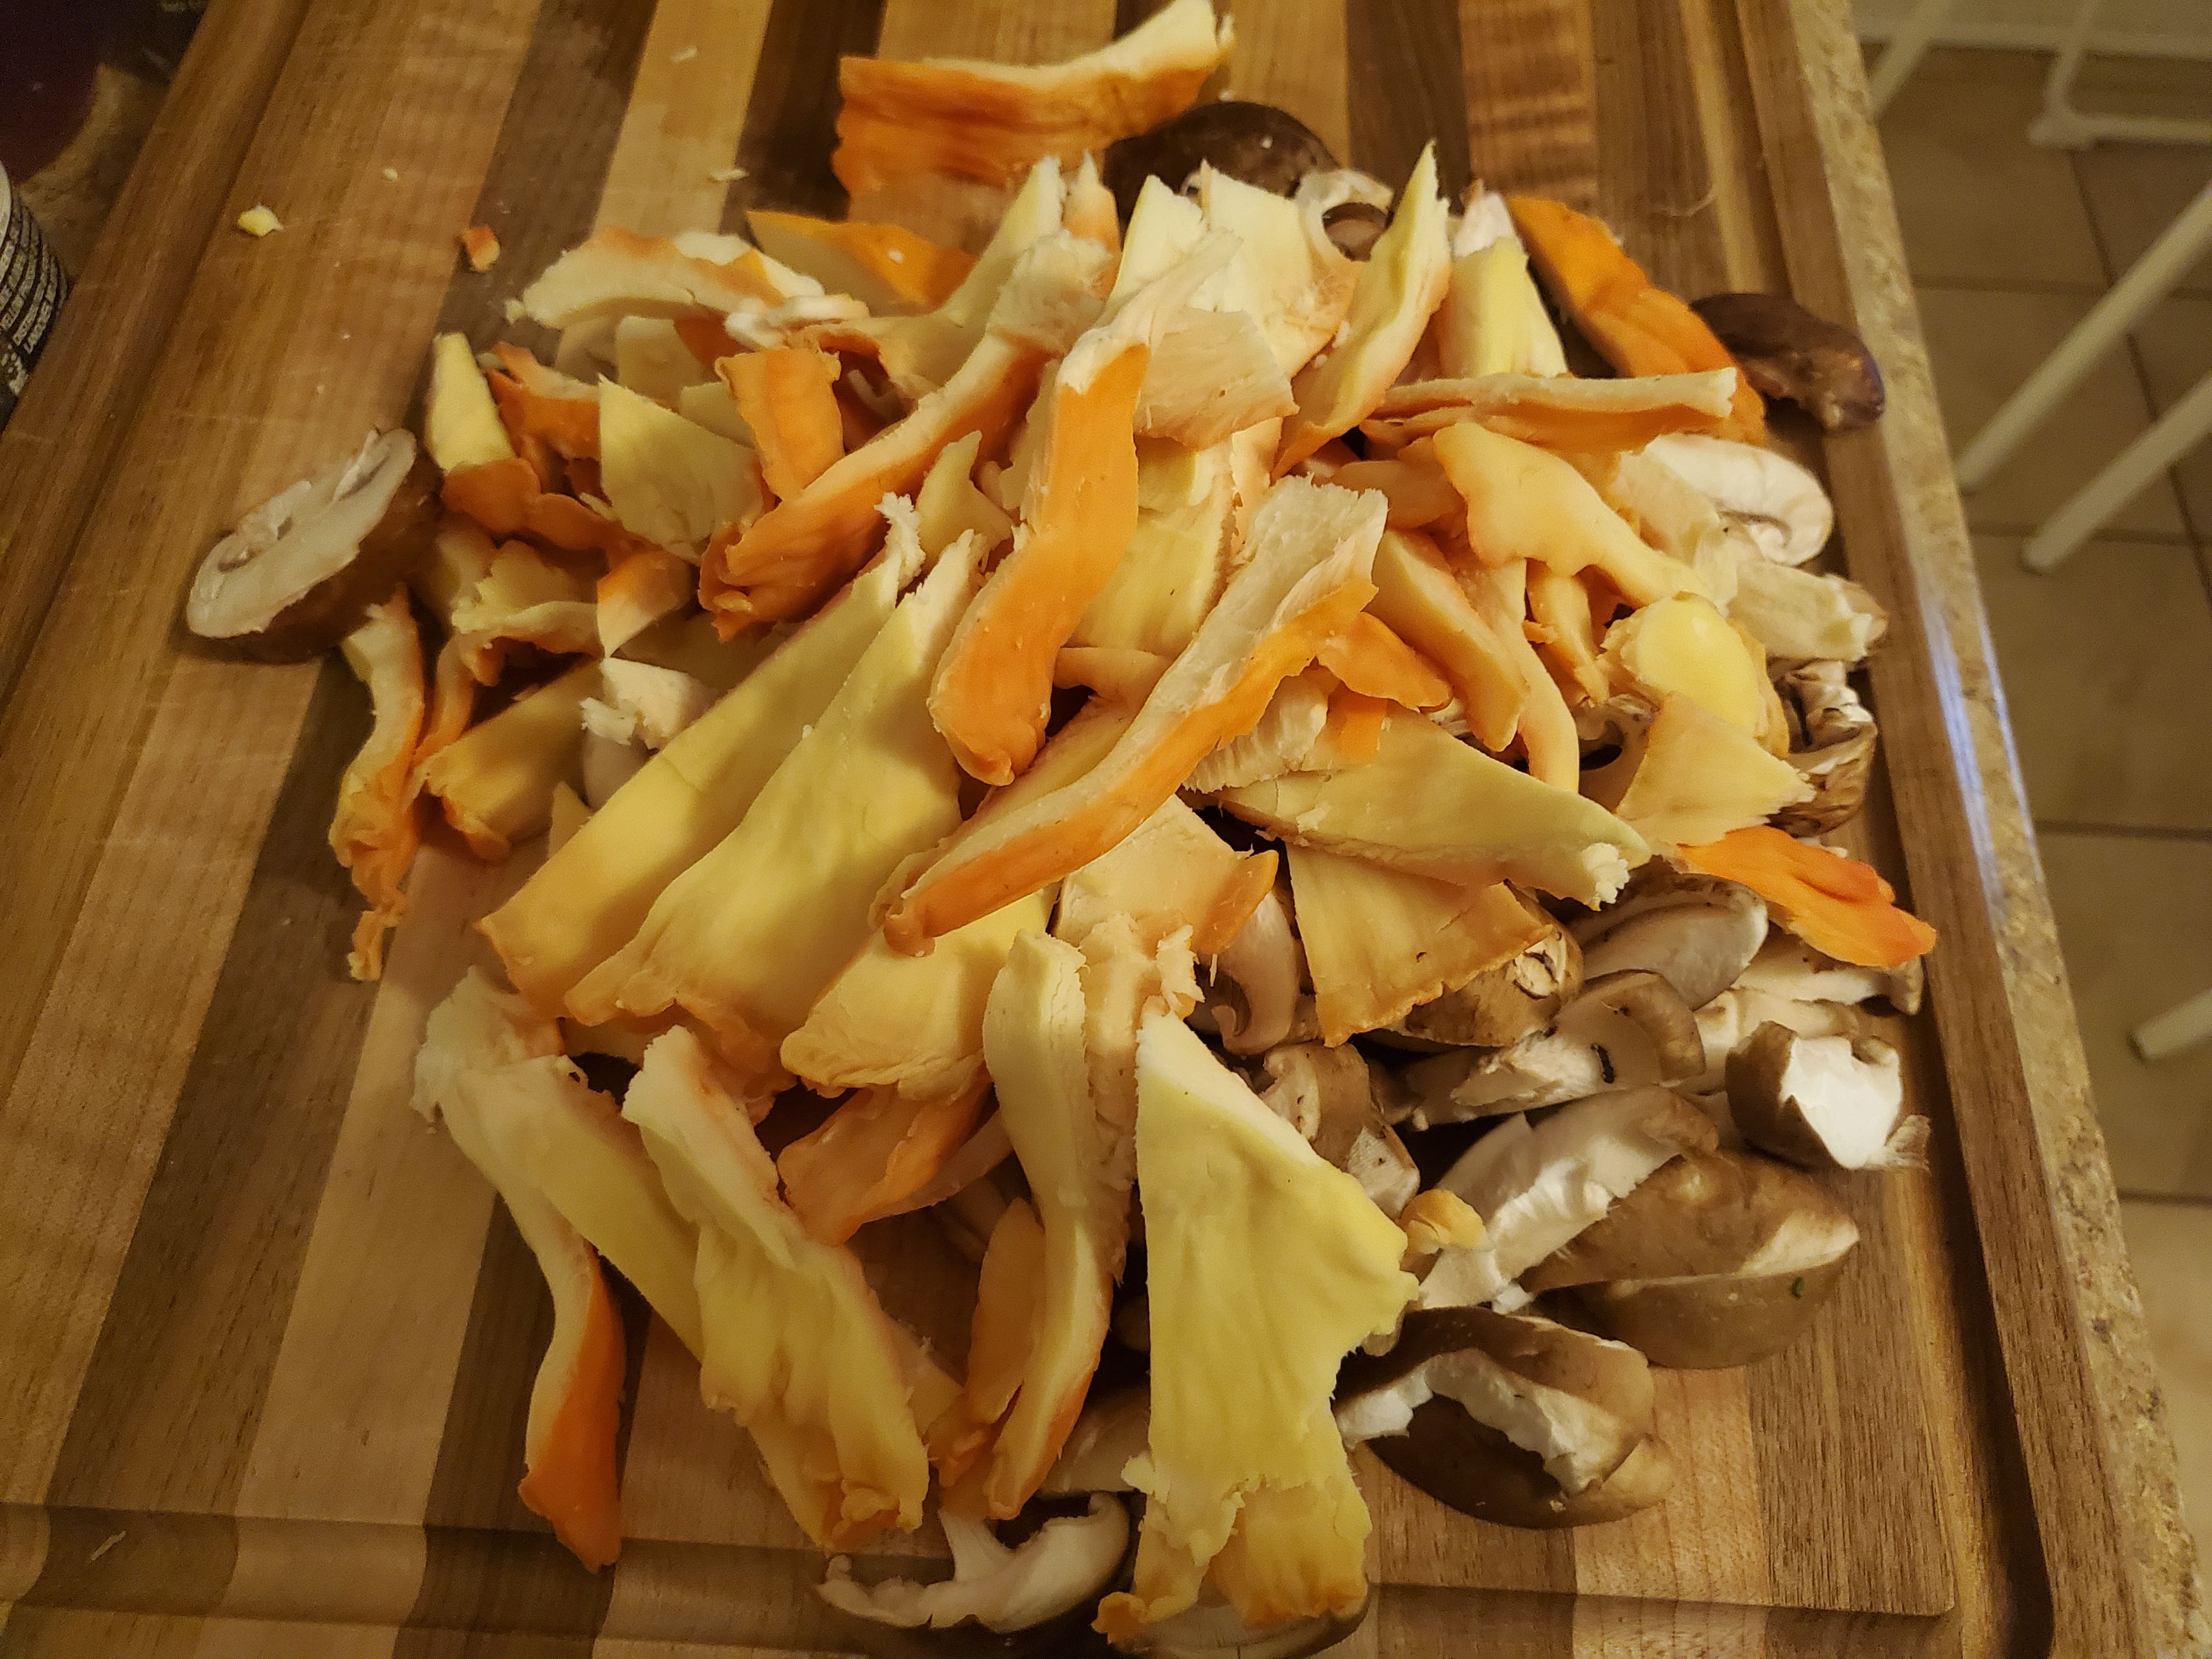 Chopped up mushrooms